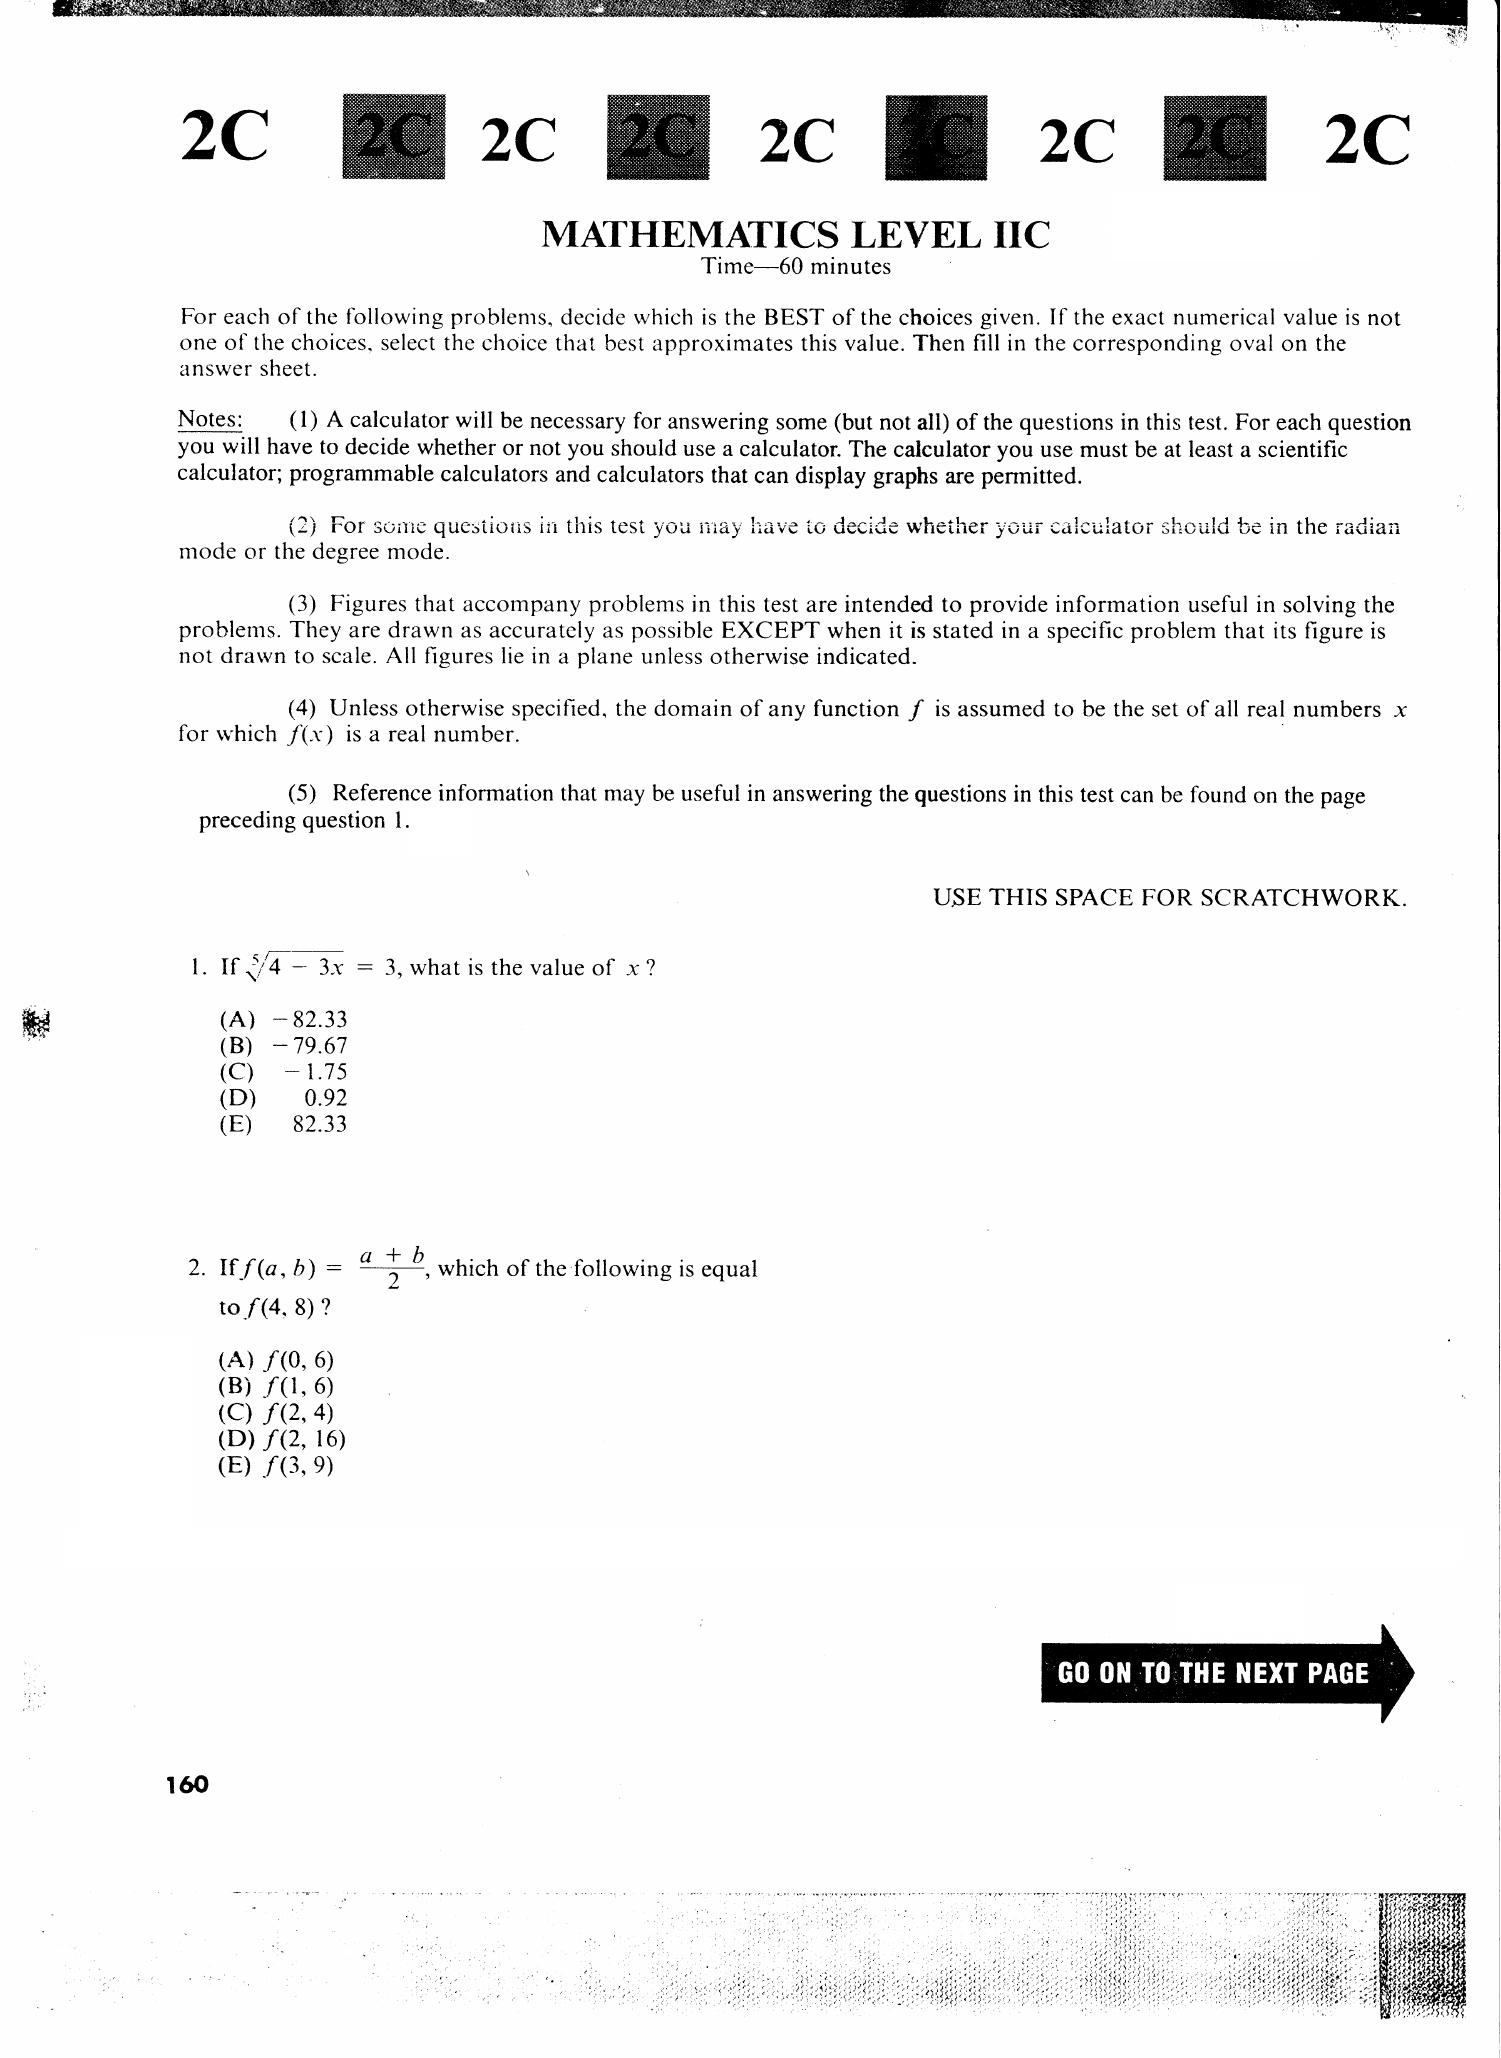 sat math practice test 1 pdf